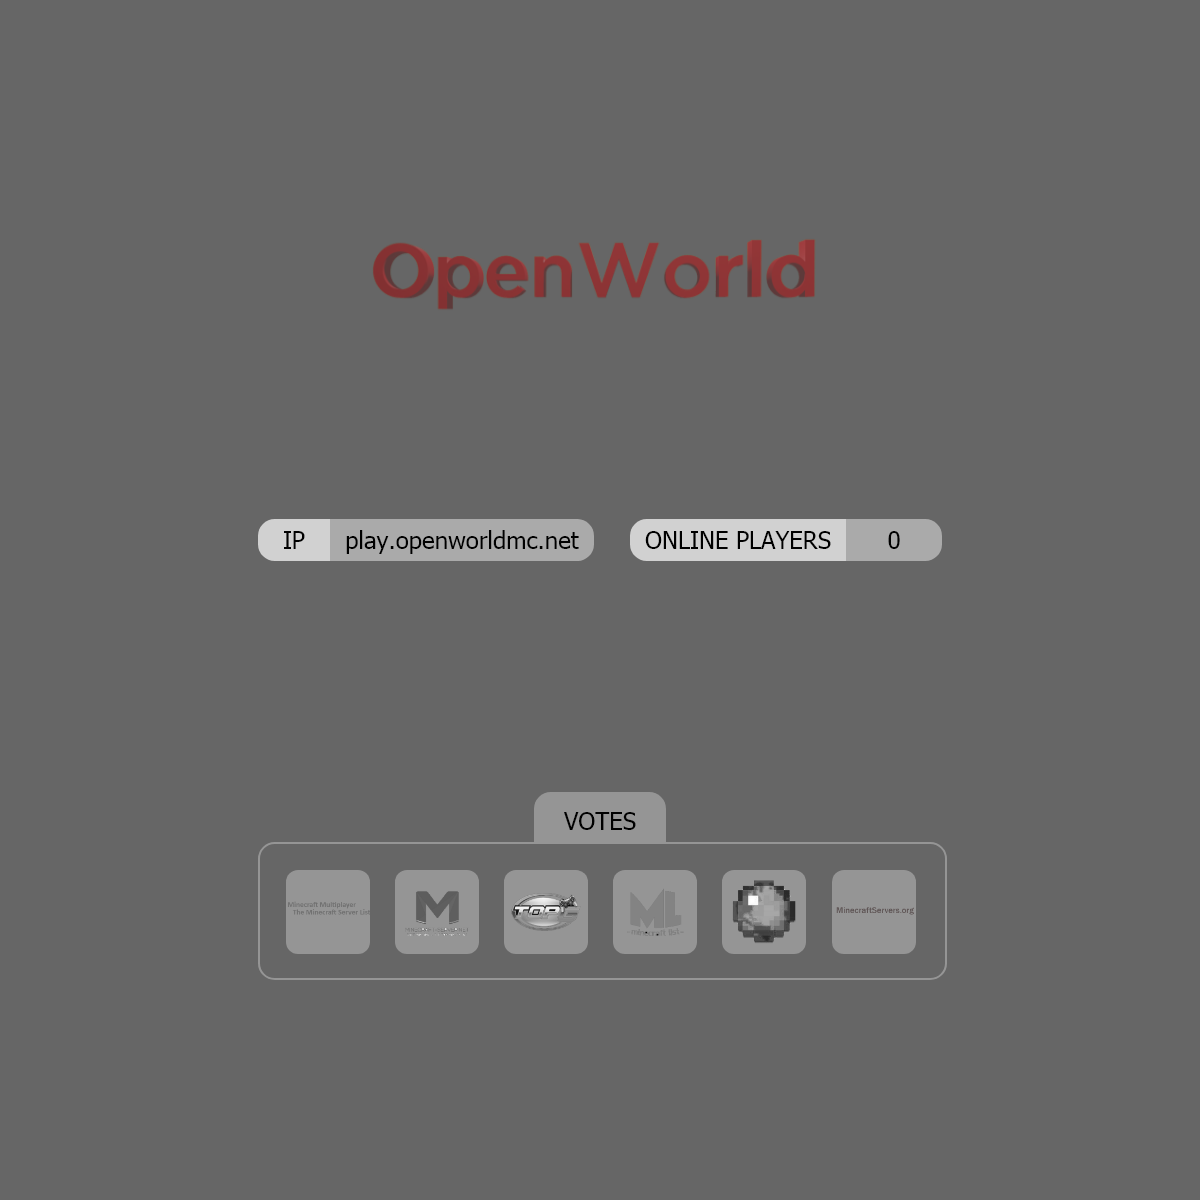 A complete backup of openworldmc.net